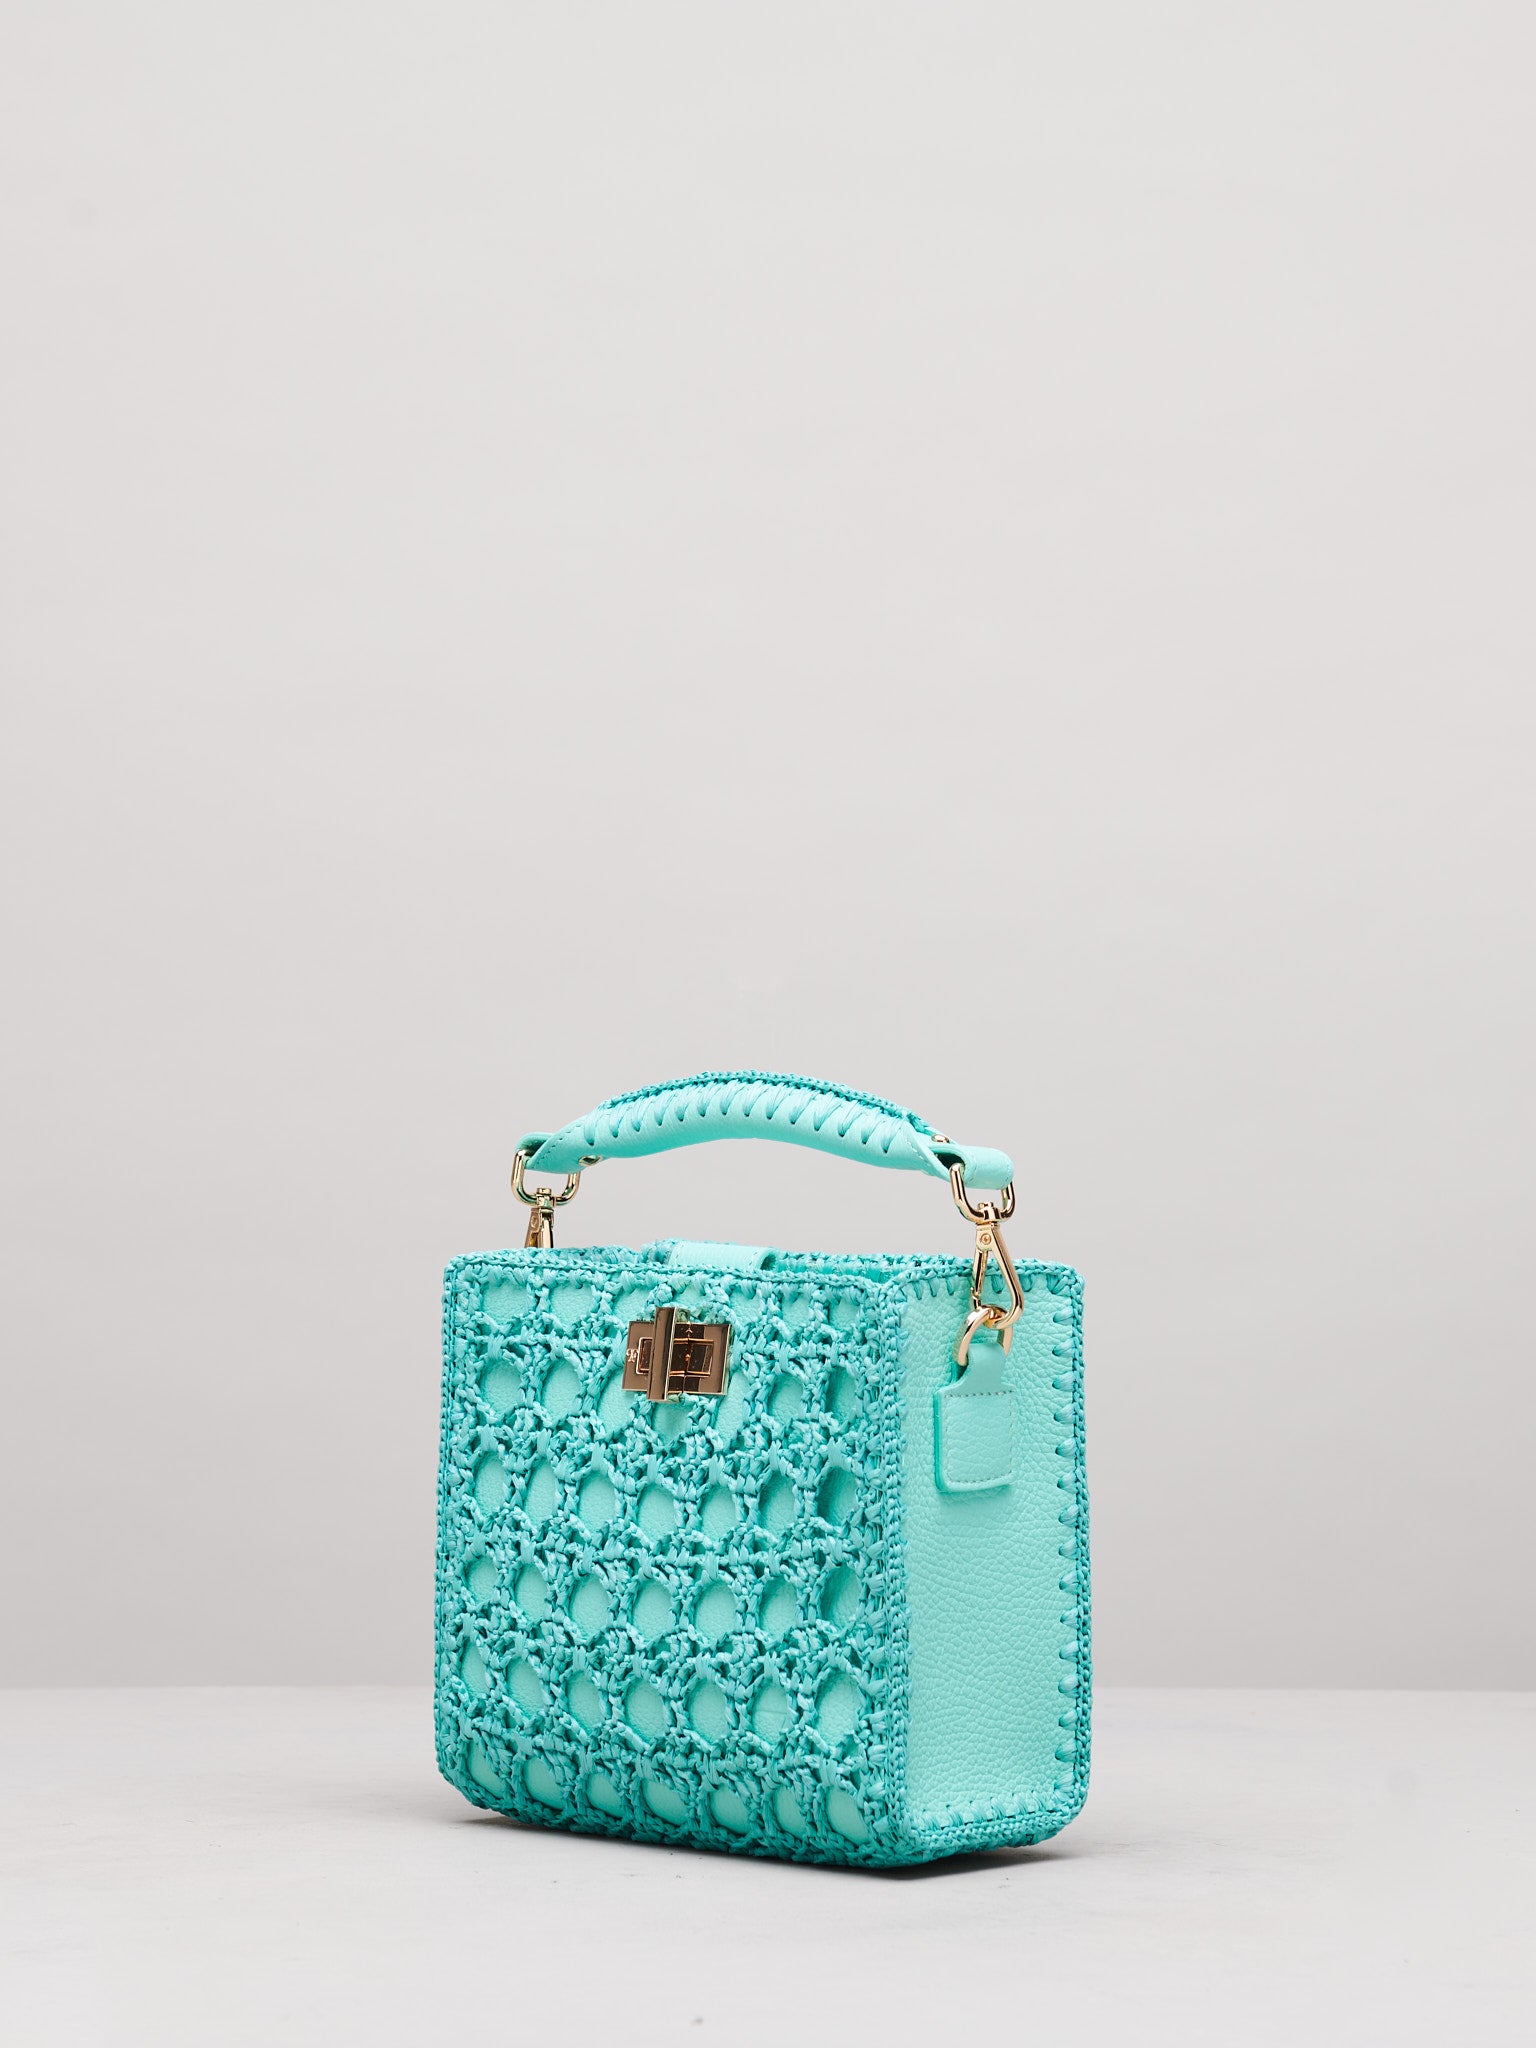 Sylvia Small Crochet Aqua - Limited Edition